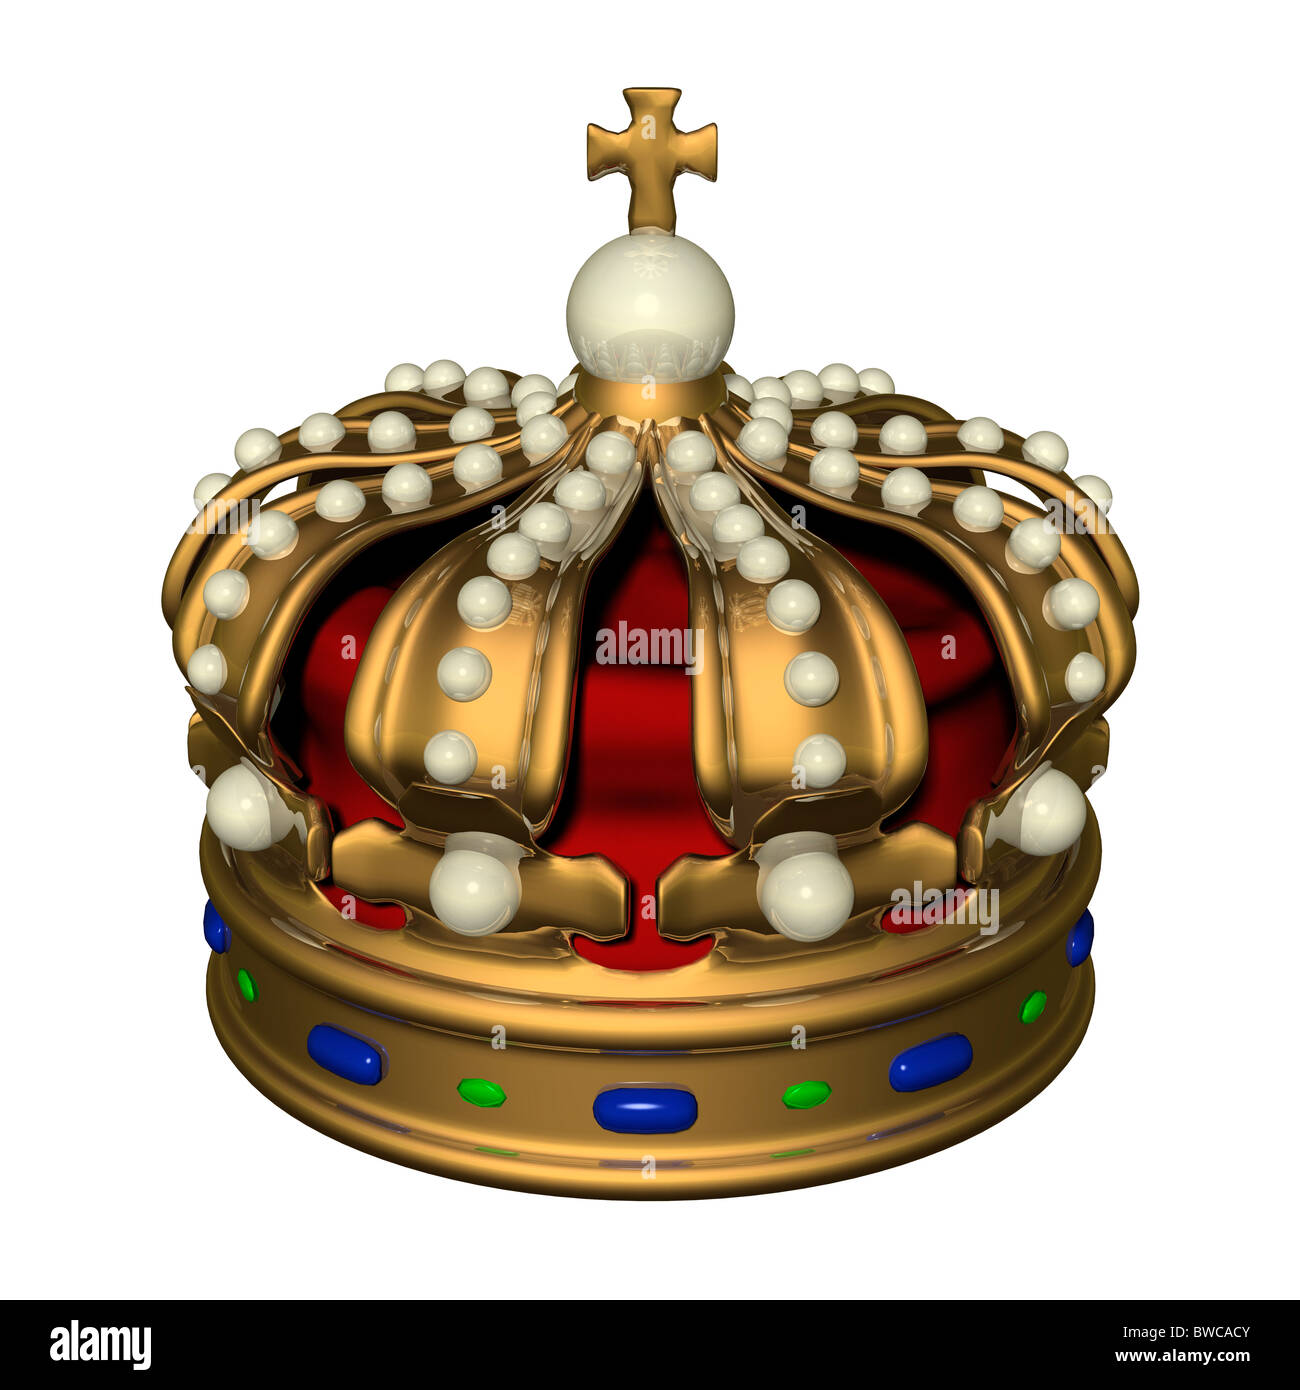 King's crown. Stock Photo